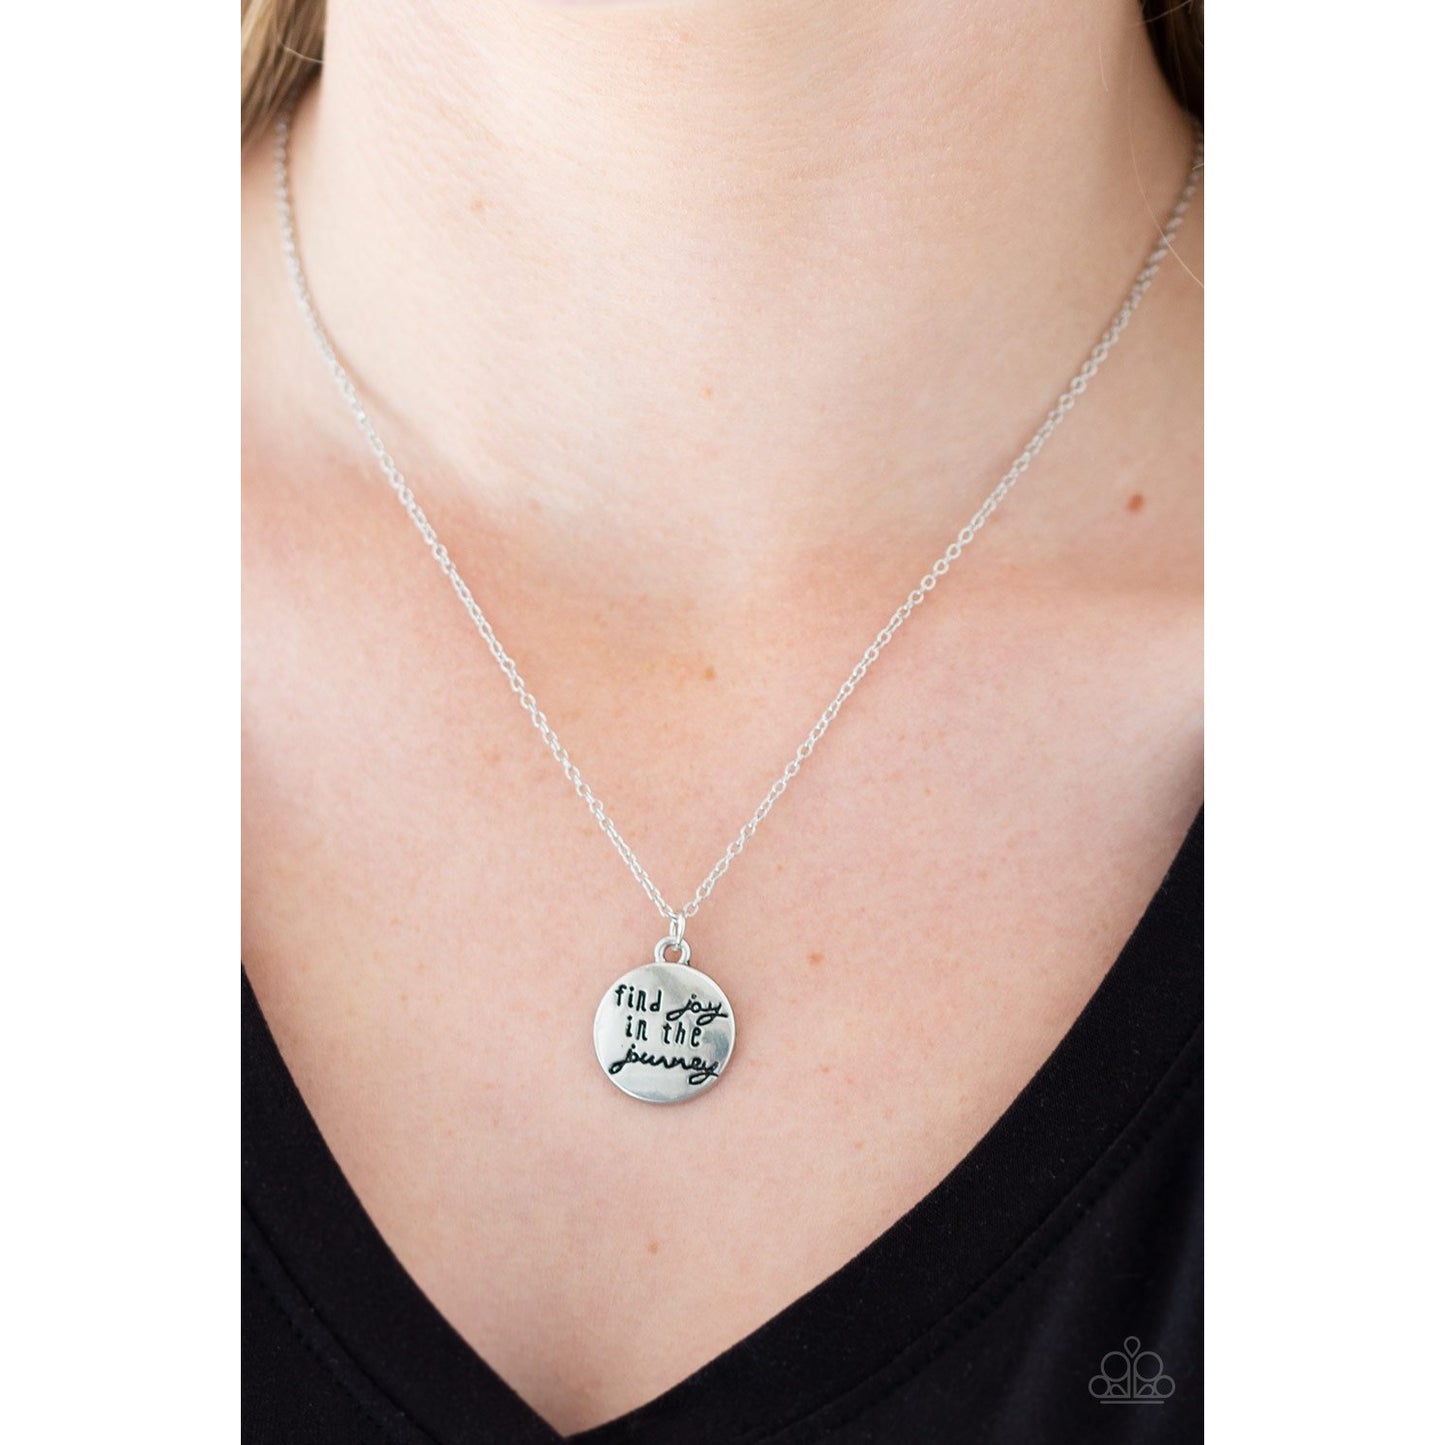 Find Joy - Silver Necklace - Paparazzi Accessories - GlaMarous Titi Jewels